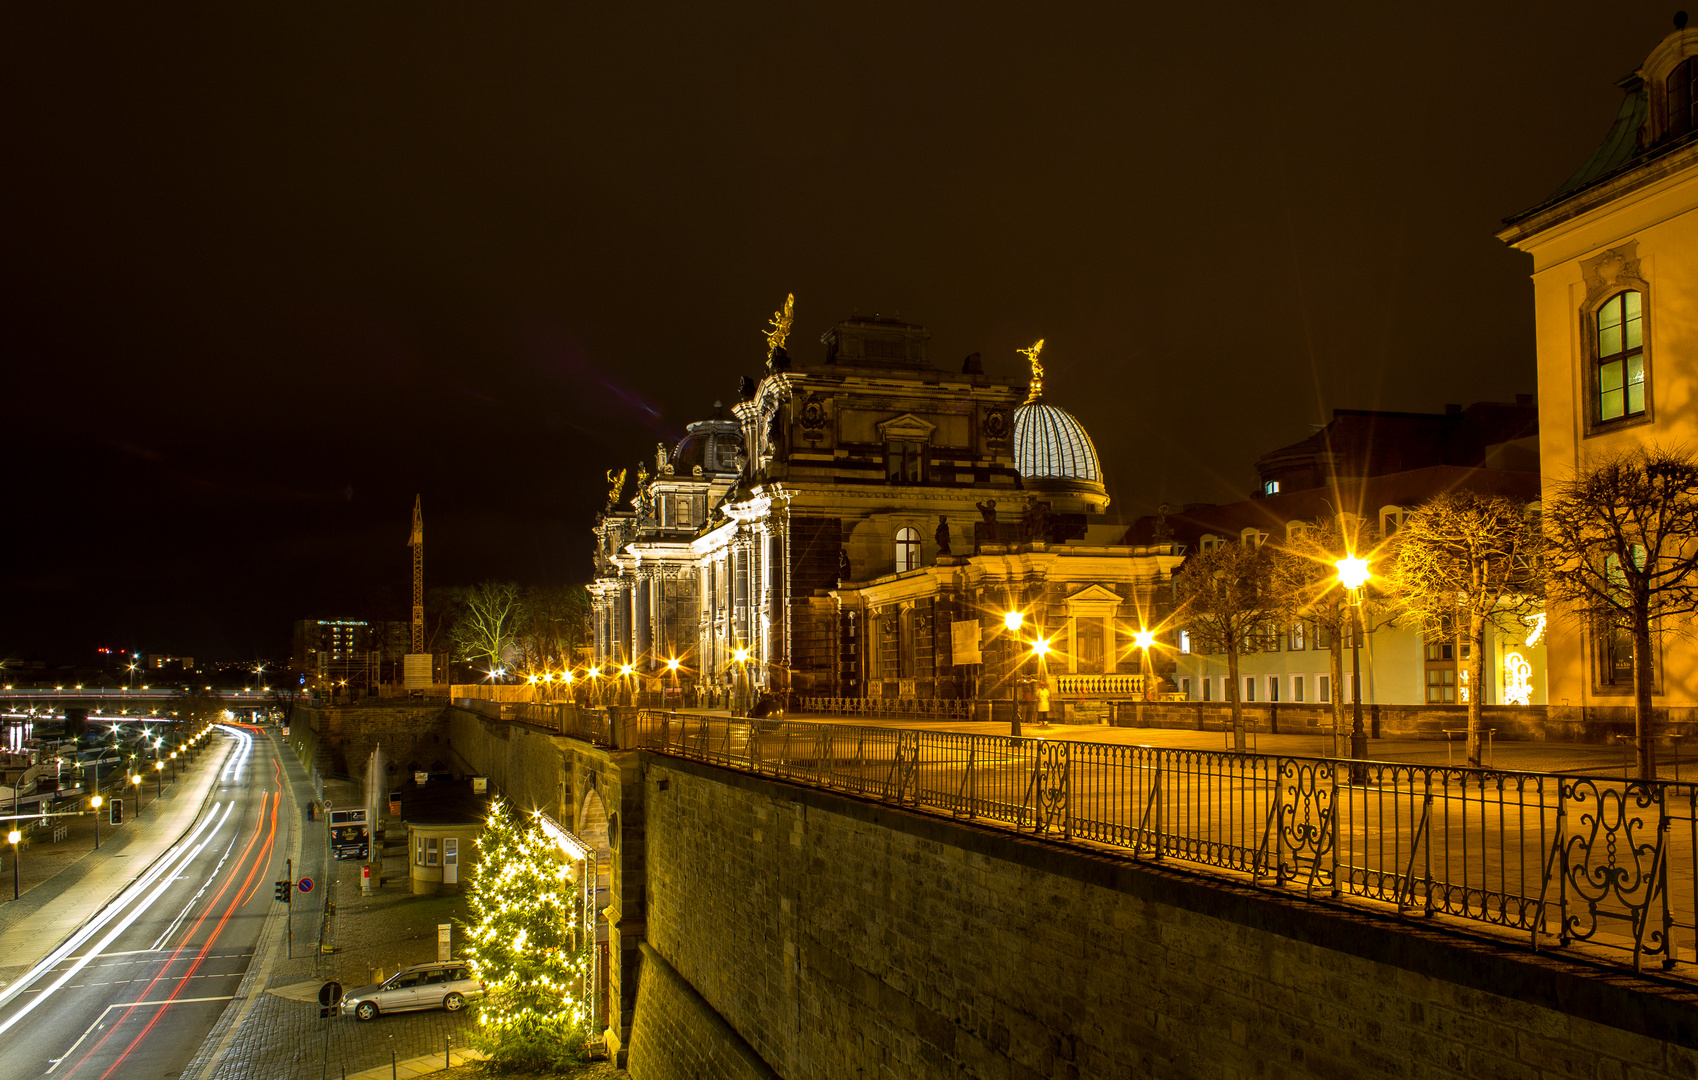 Skyline Dresden